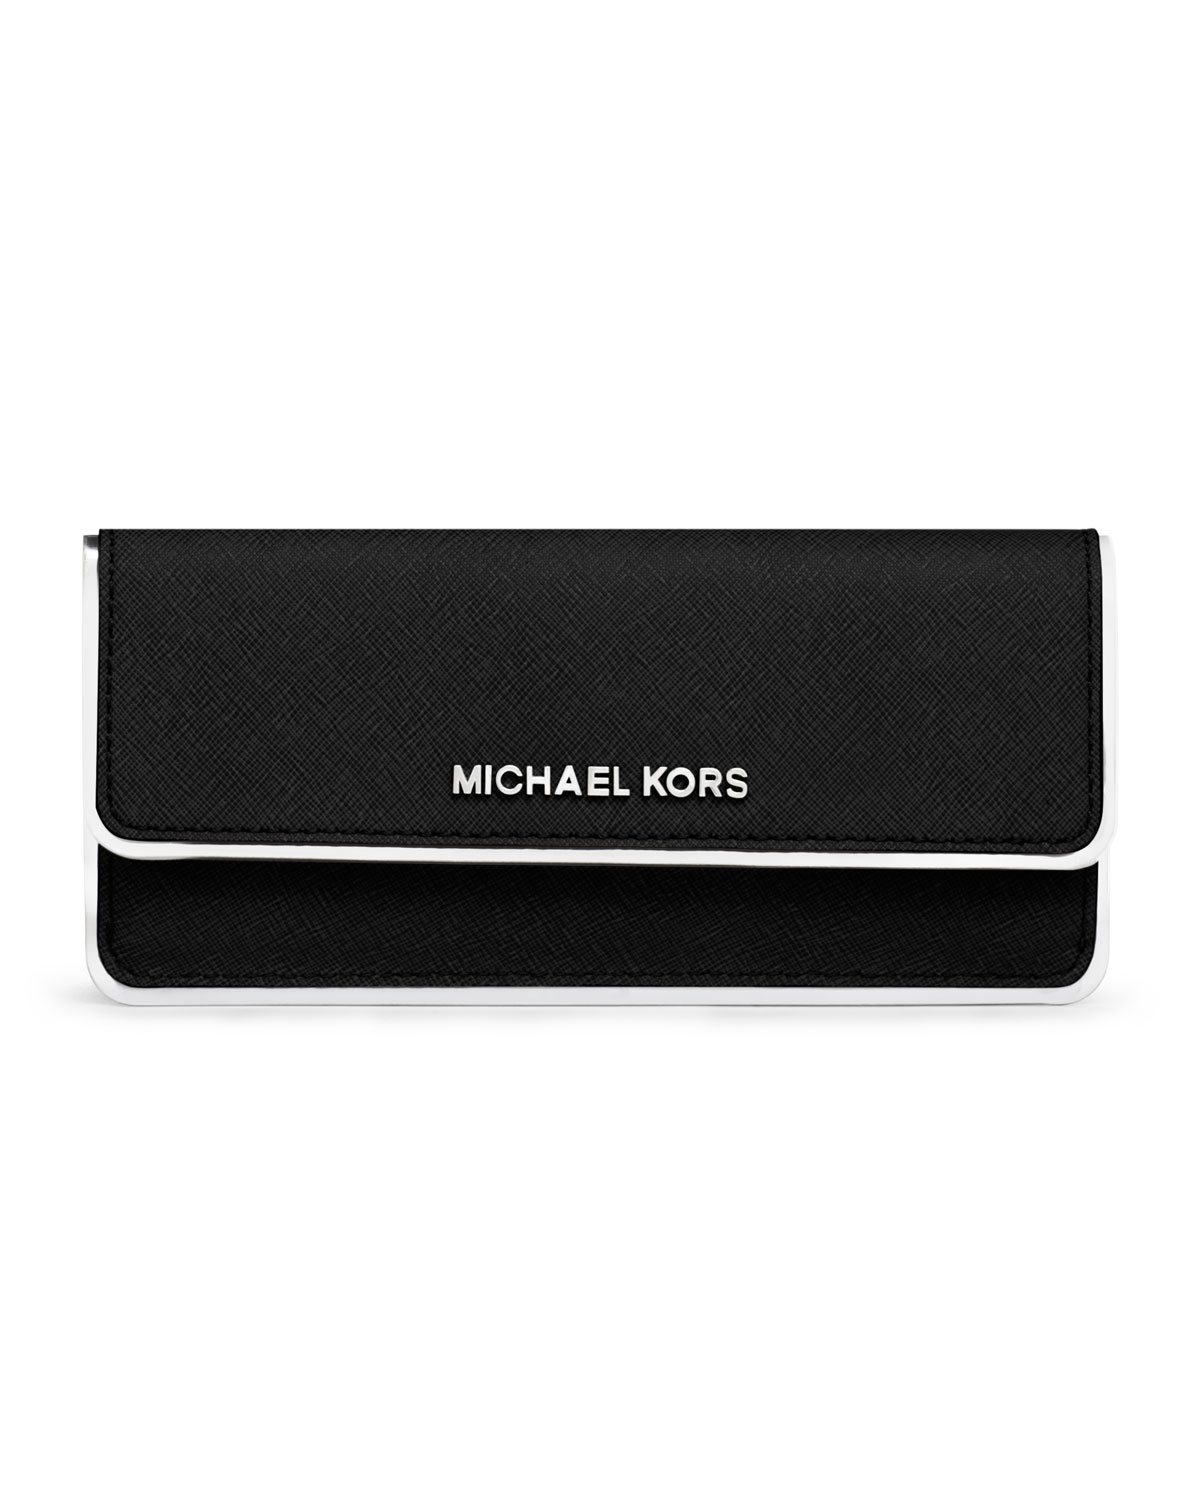 Michael Kors Michael Jet Set Travel Specchio Flat Wallet in Black